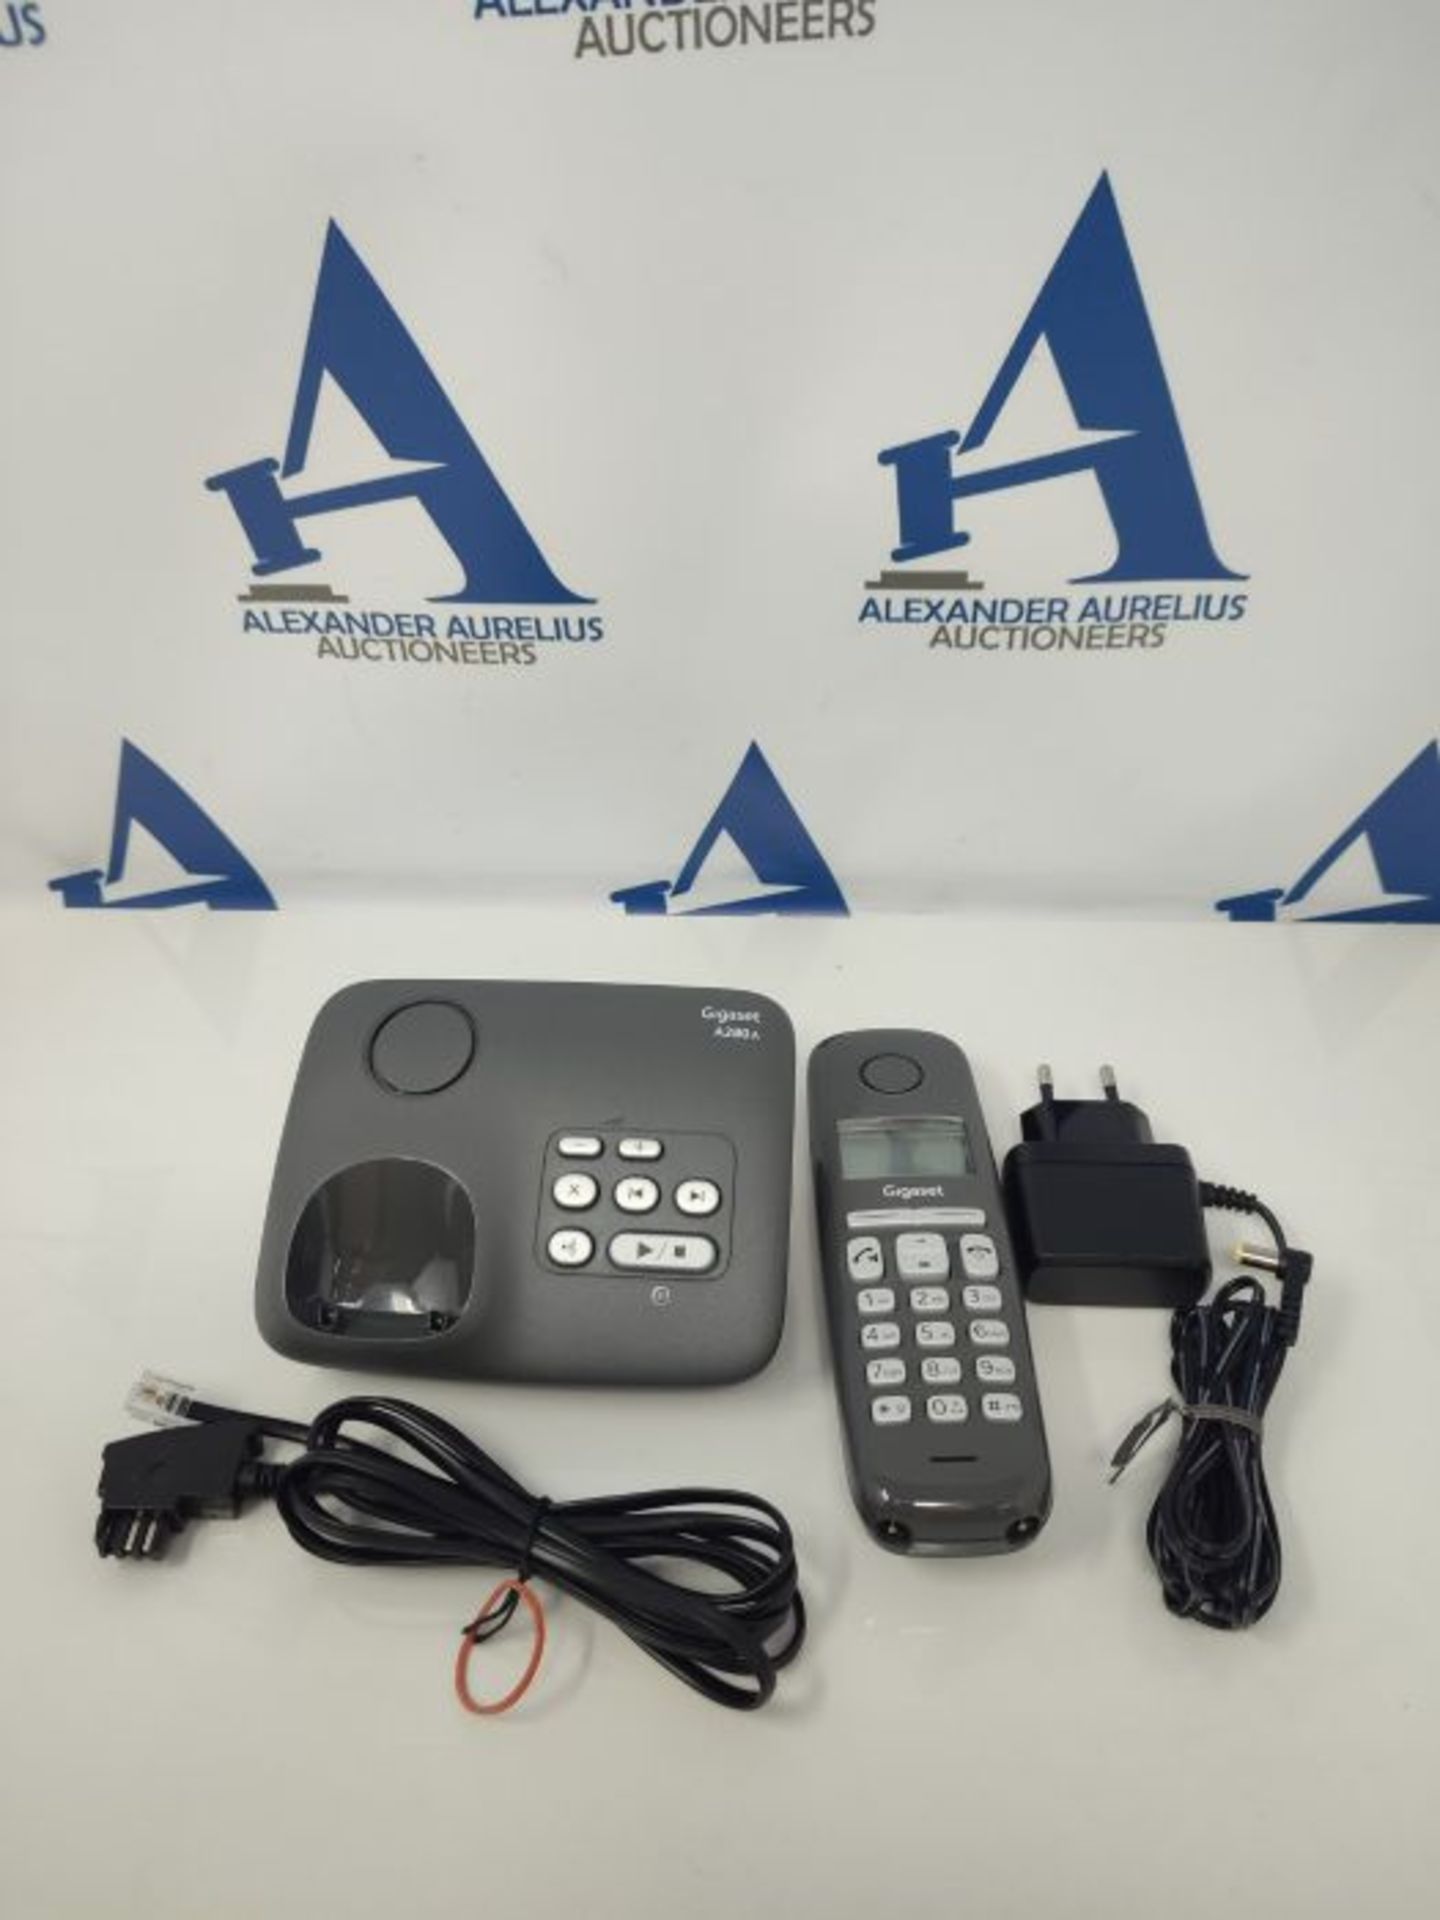 Gigaset A280A - Schnurloses Telefon mit Anrufbeantworter - brillante AudioqualitÃ¤t - Image 2 of 2